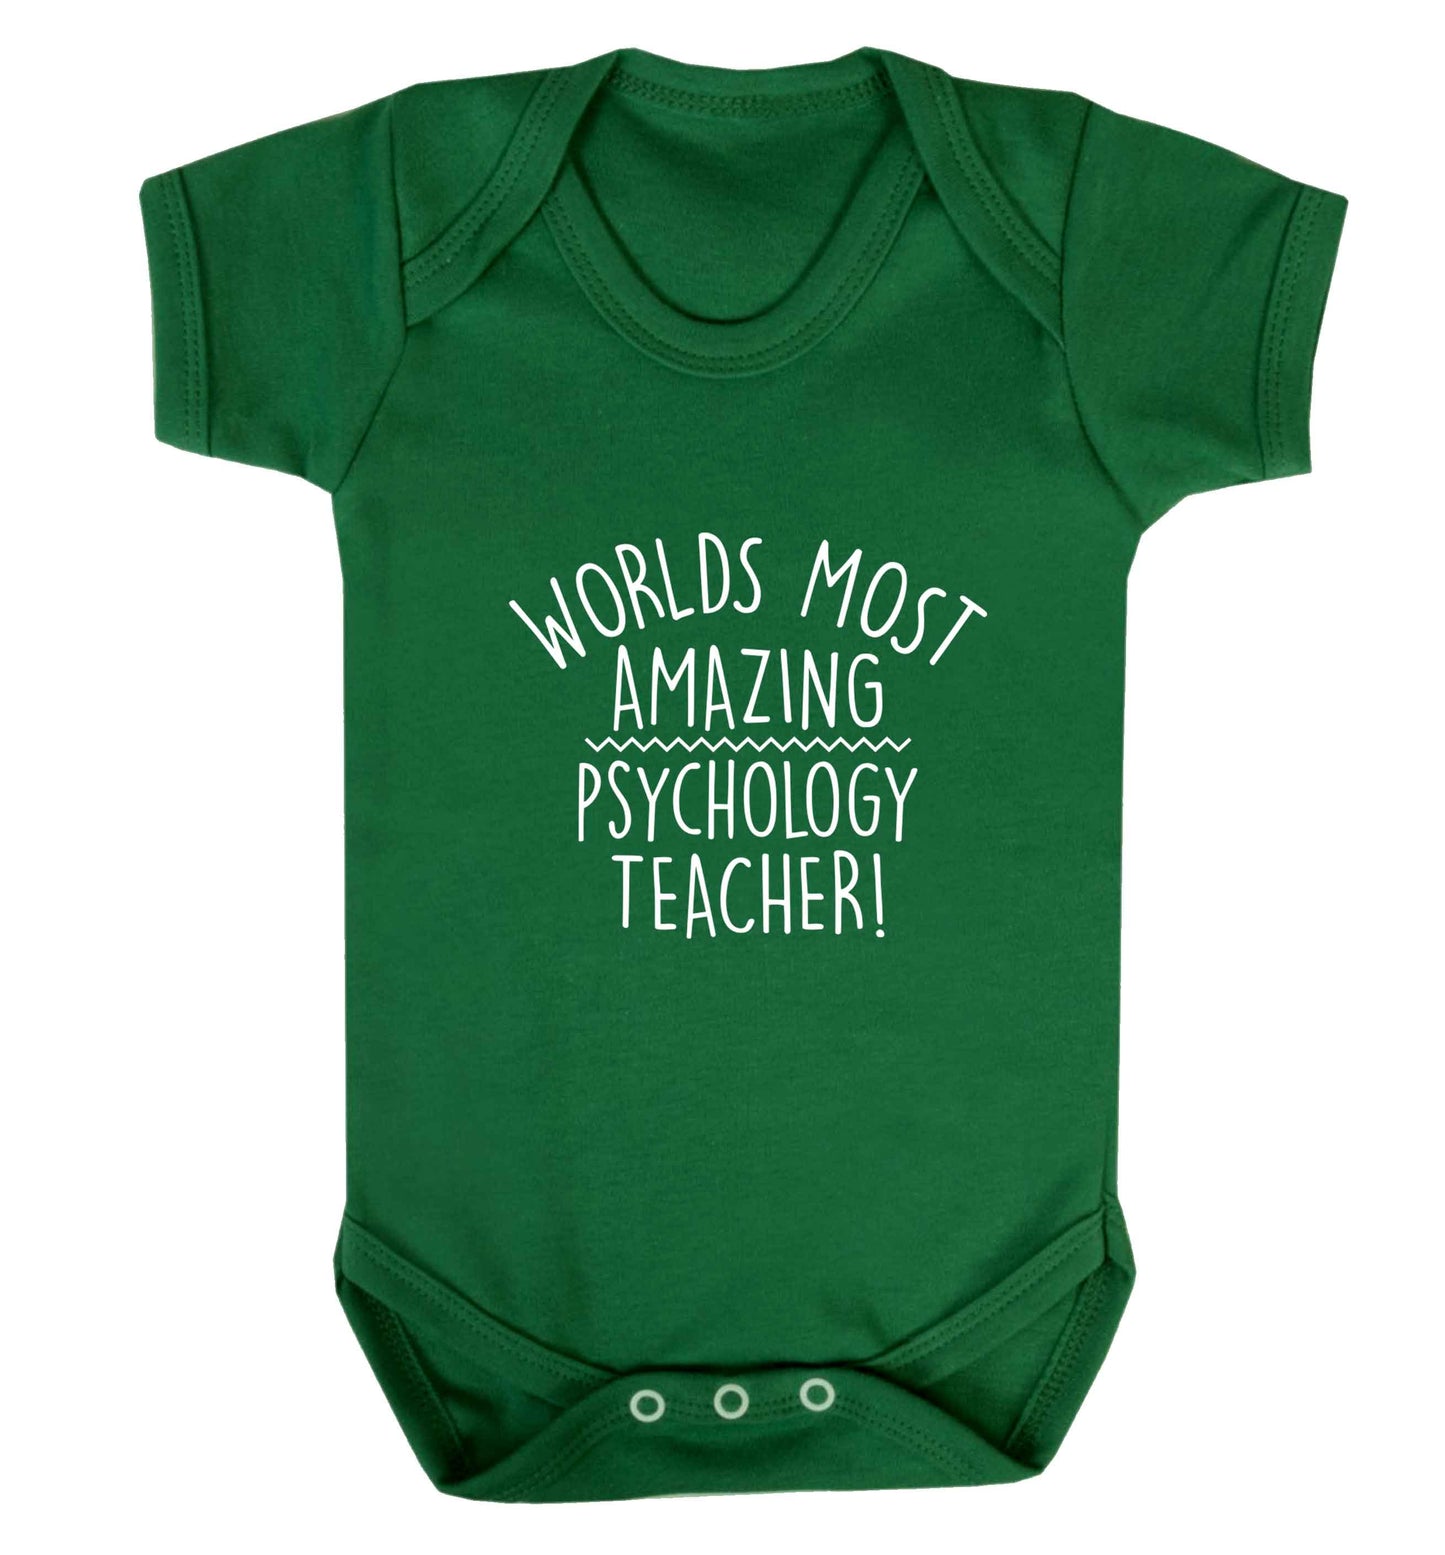 Worlds most amazing psychology teacher baby vest green 18-24 months